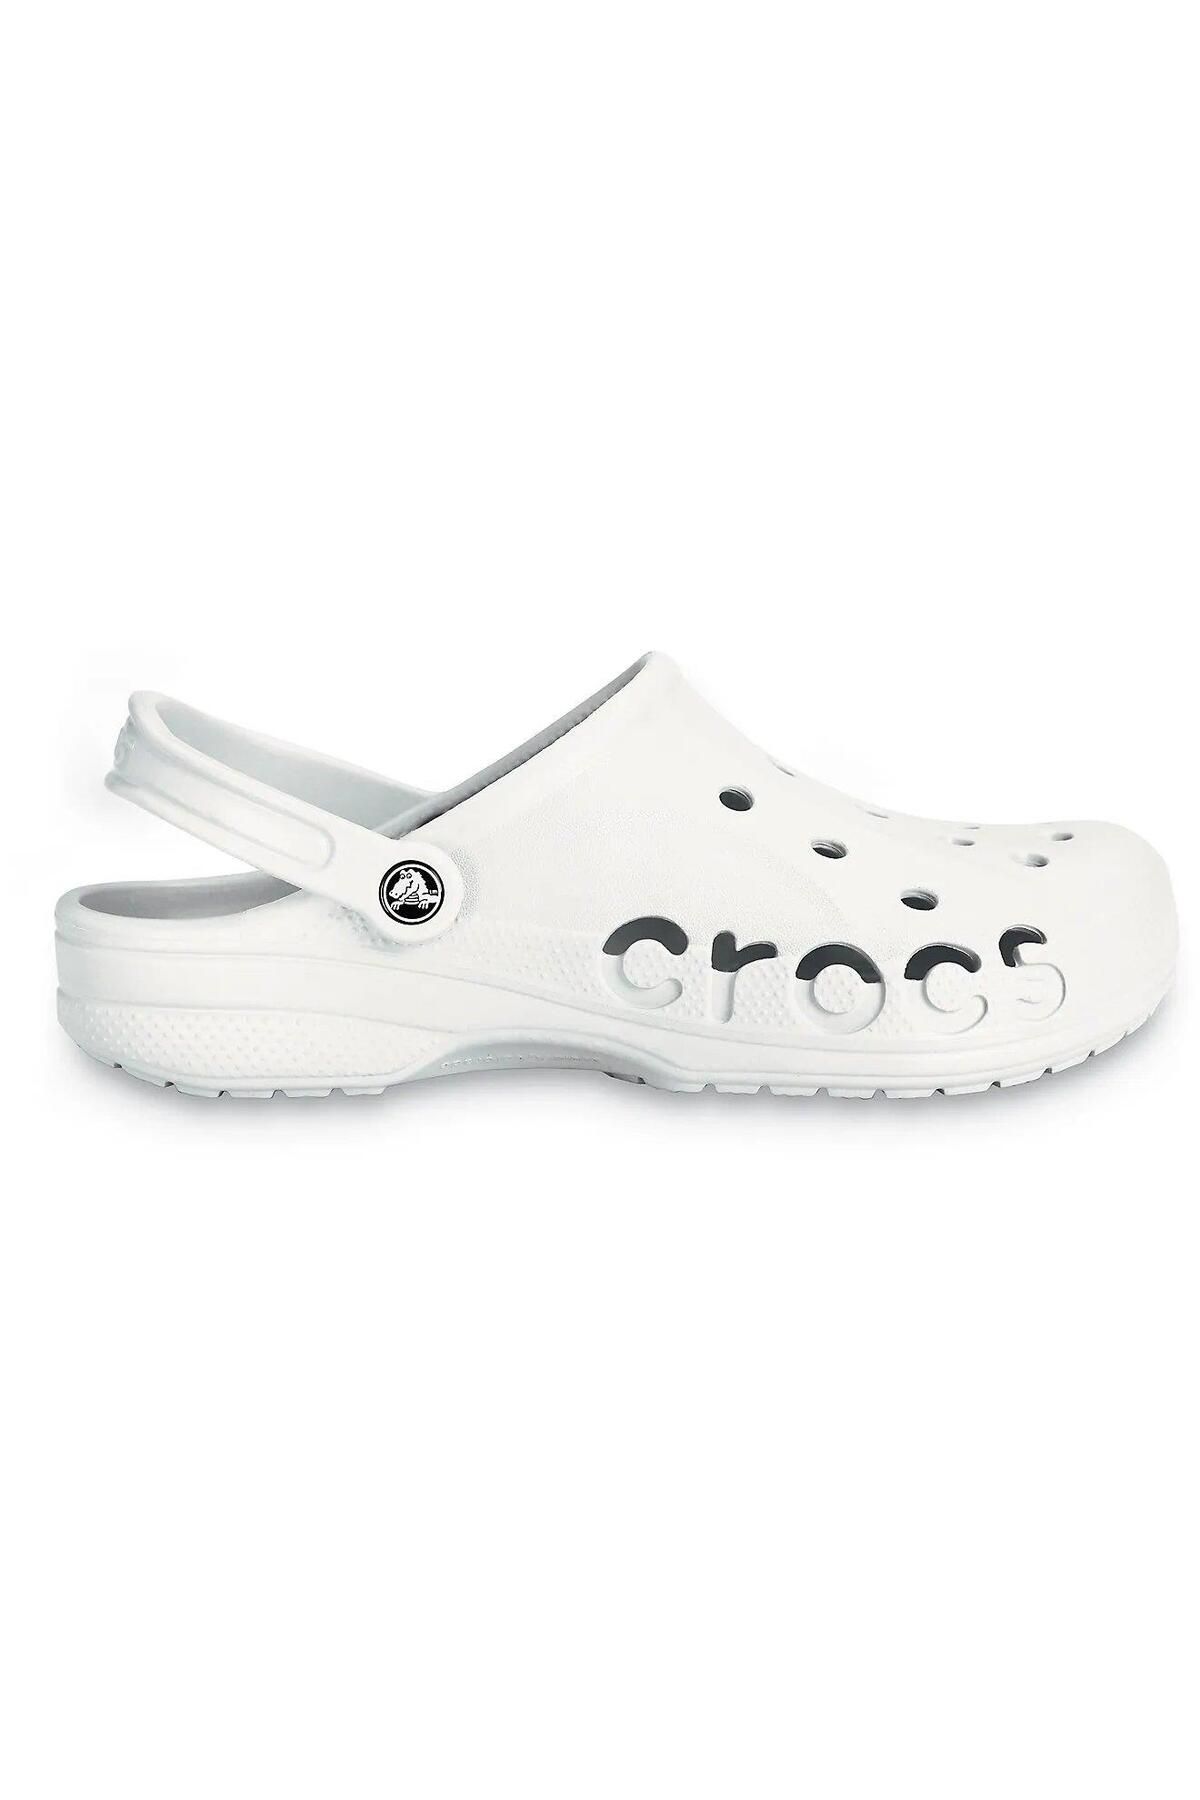 Crocs دمپایی کاملاً گرفتگی unisex 10126-100 سفید